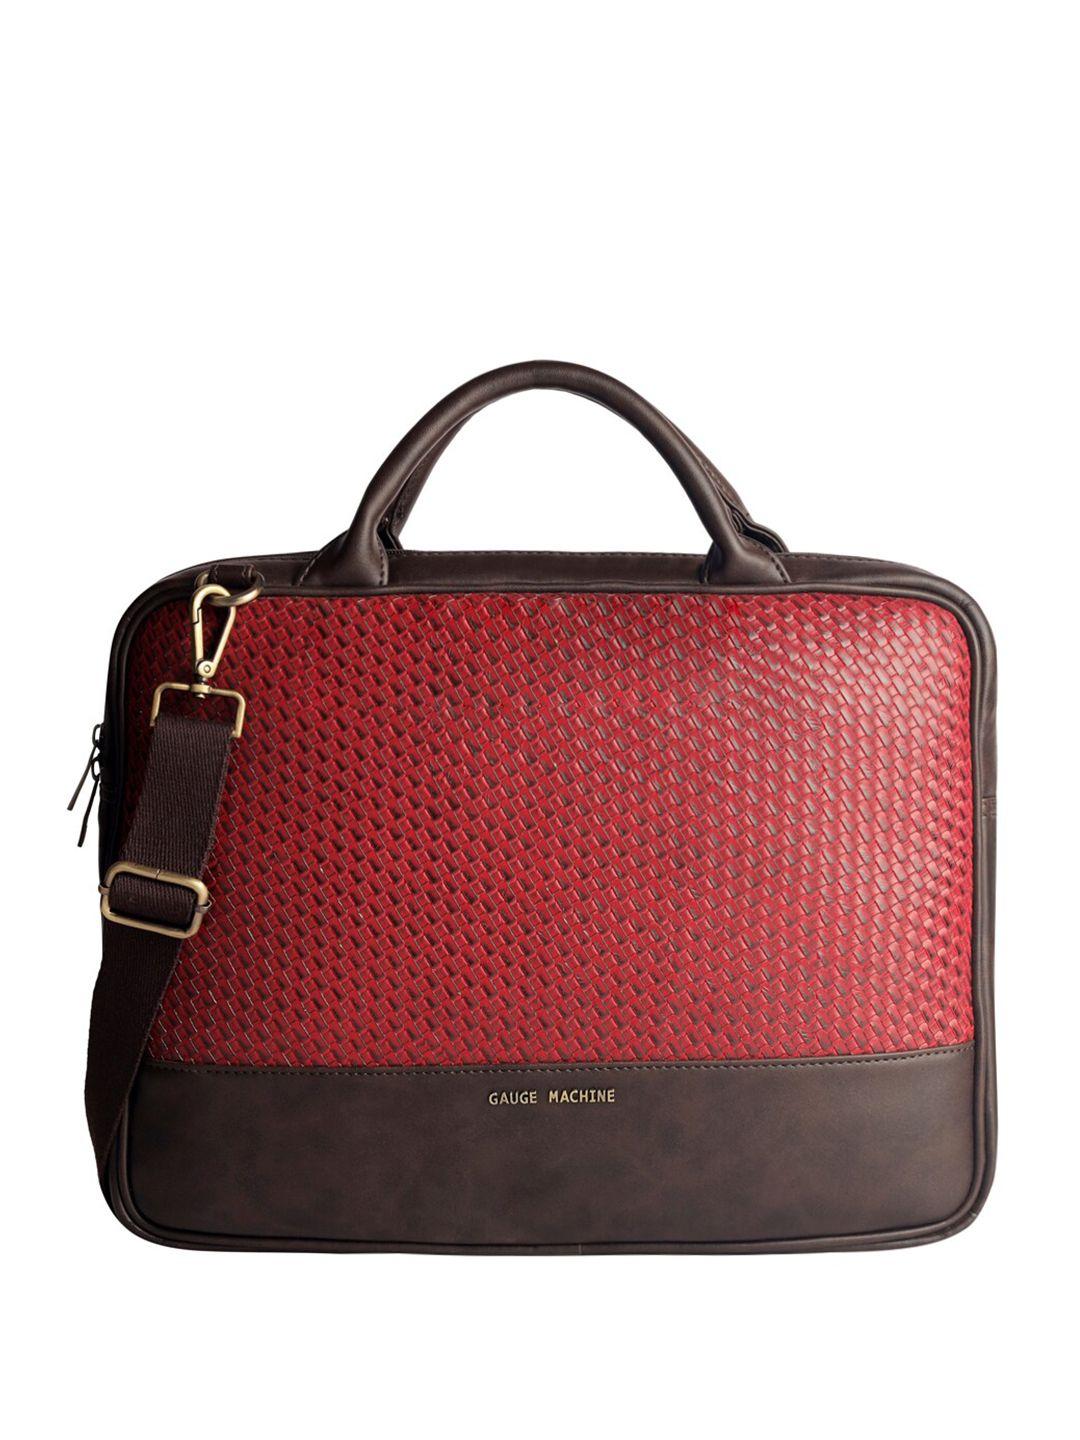 gauge machine unisex brown & red textured leather laptop bag